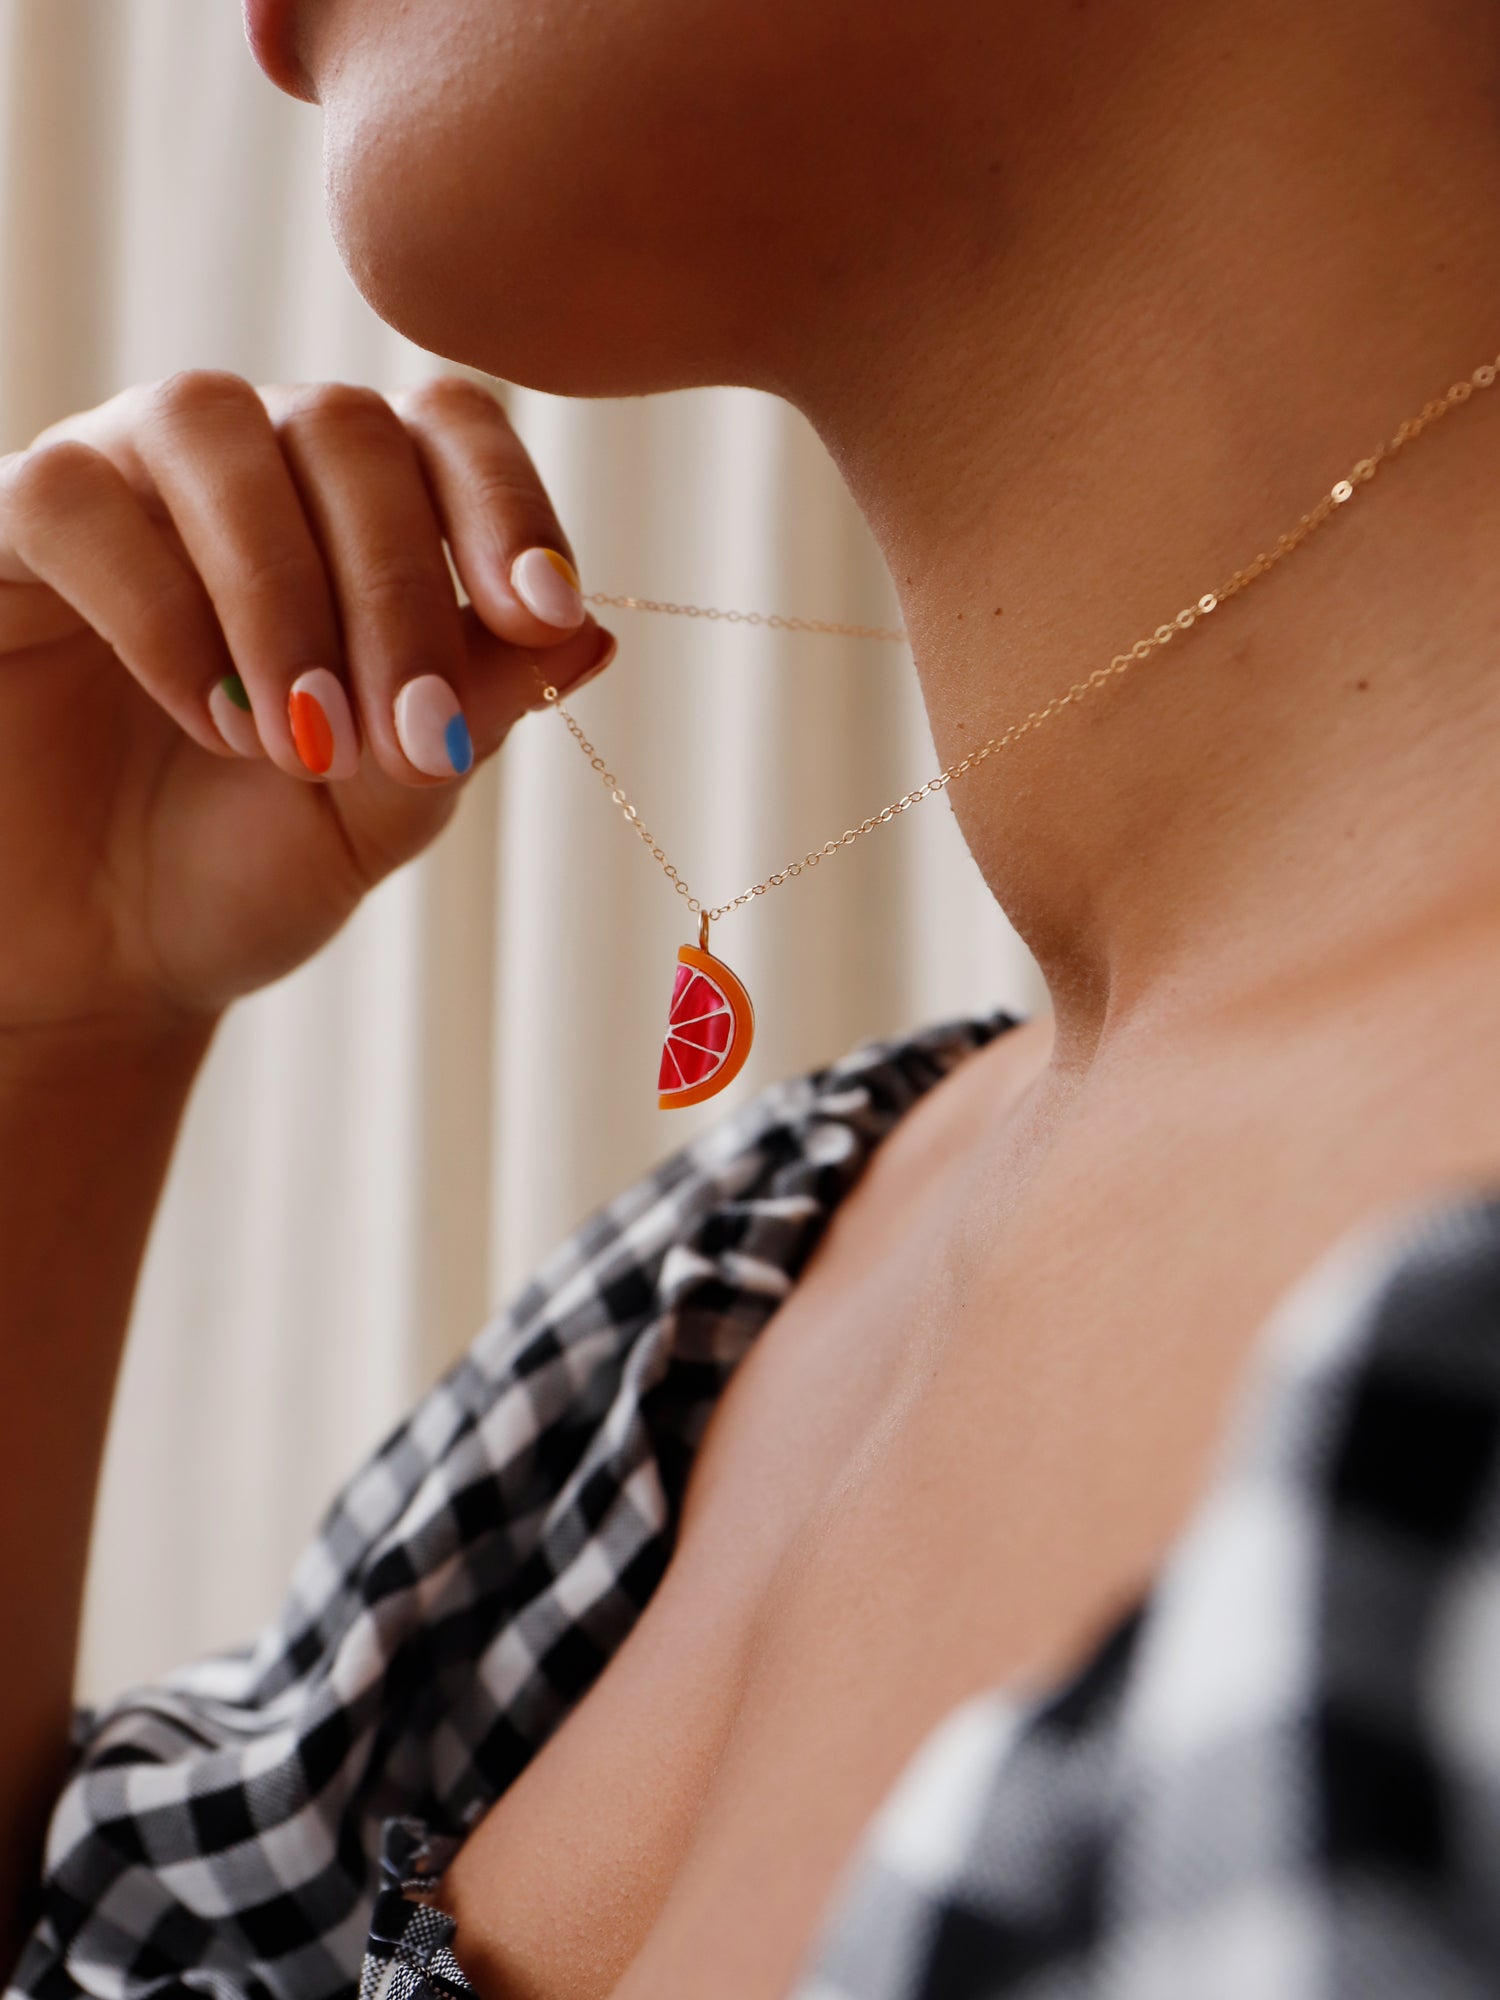 Grapefruit Slice Necklace